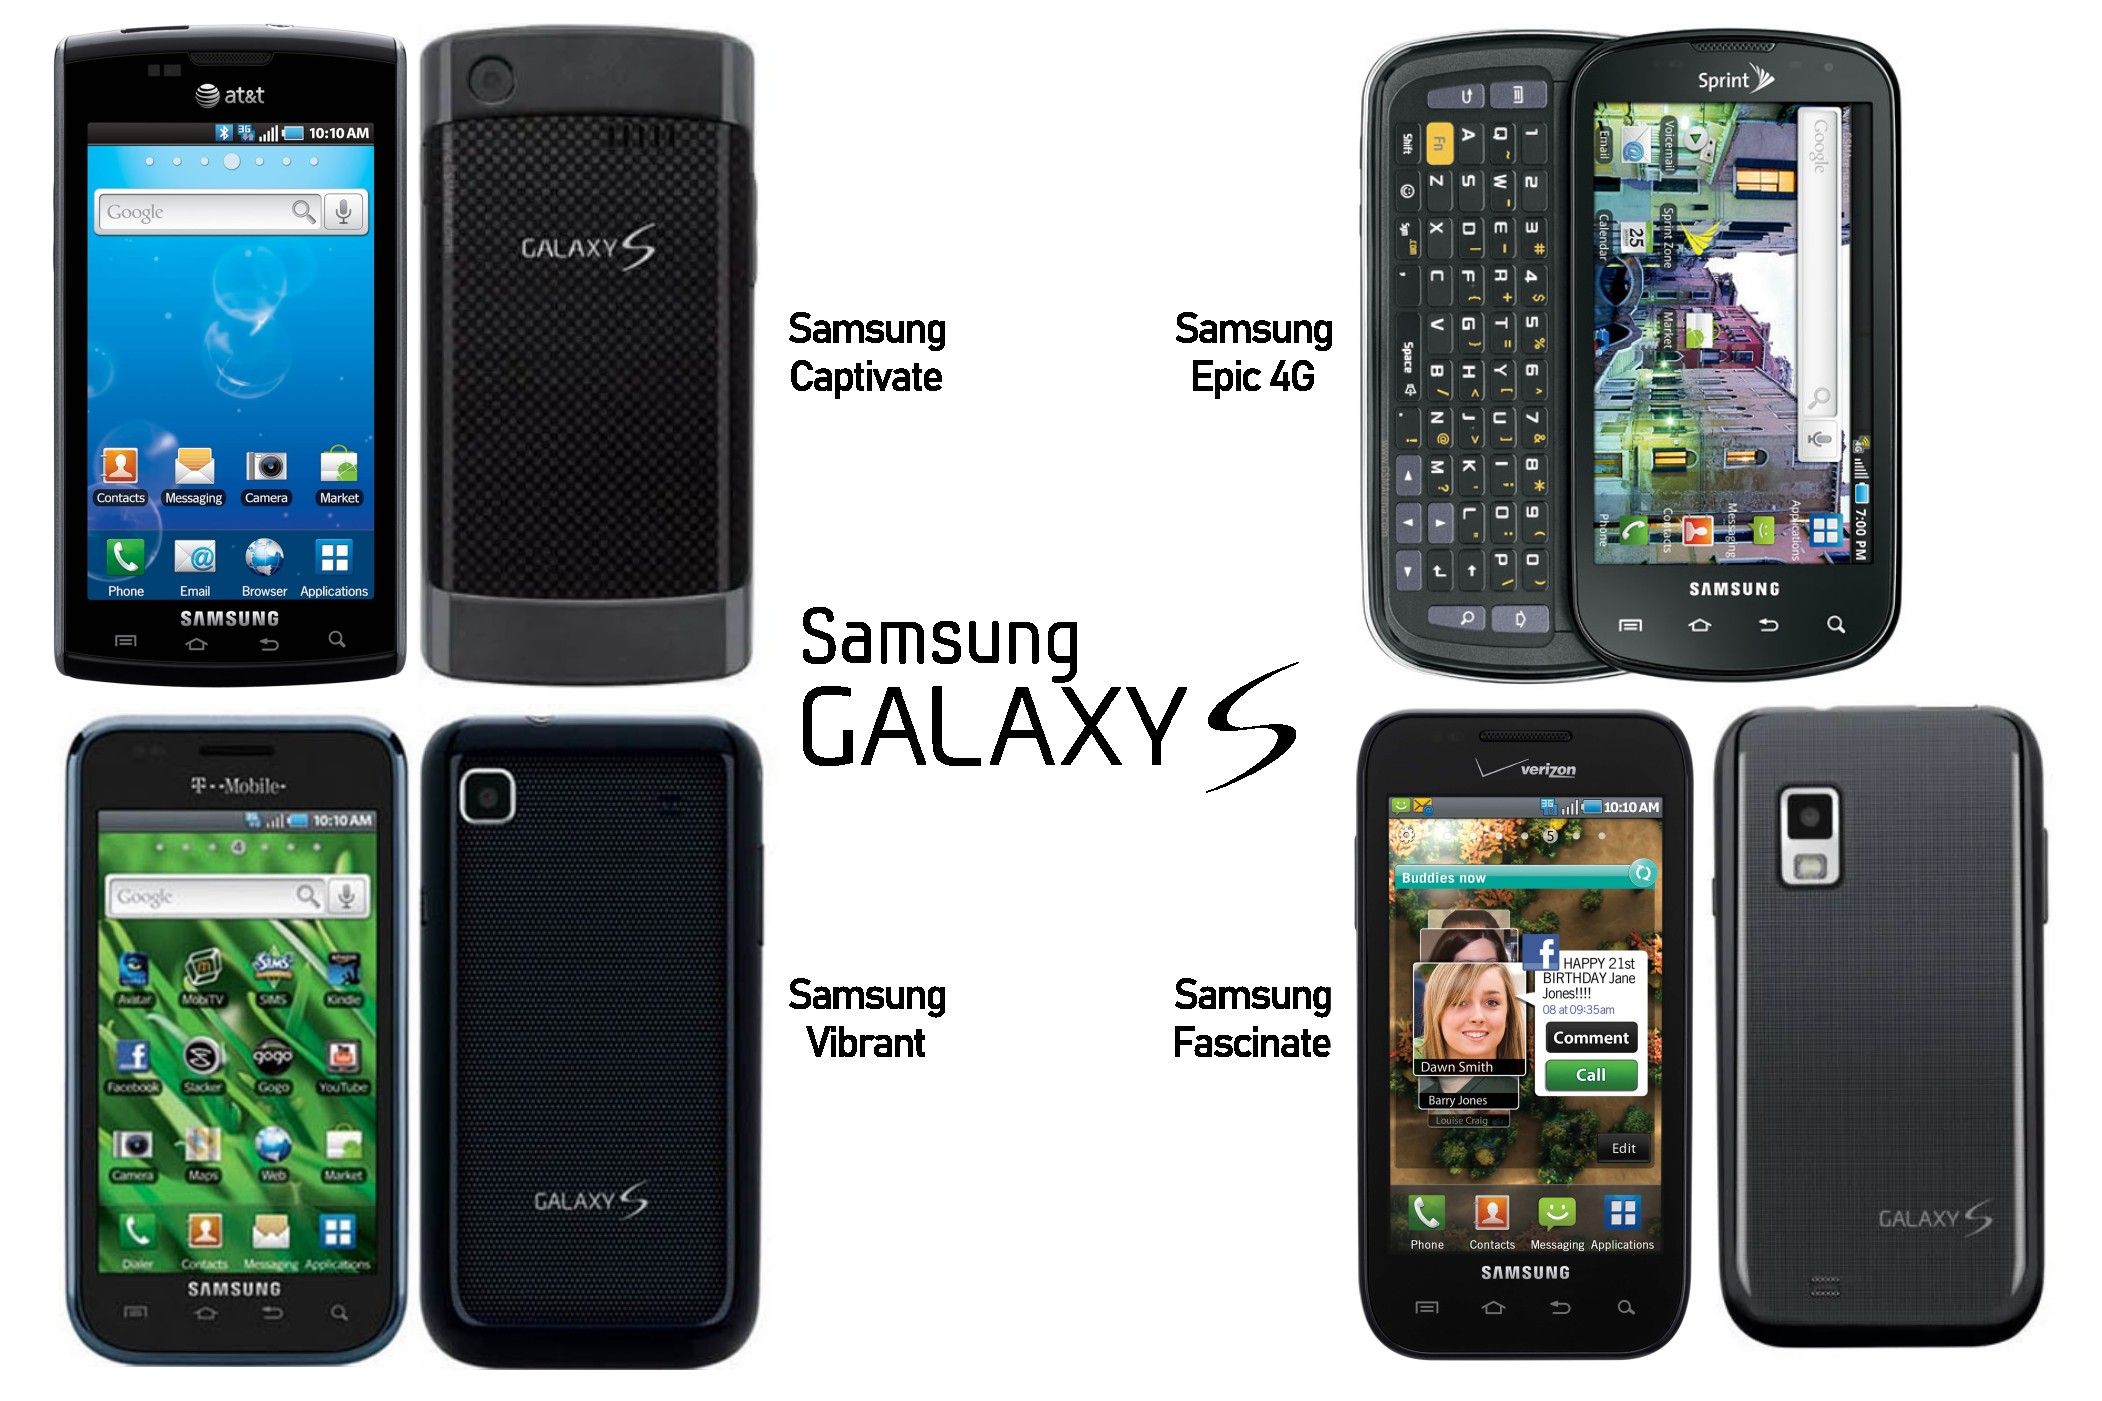 Samsung Galaxy S 2010 variants.